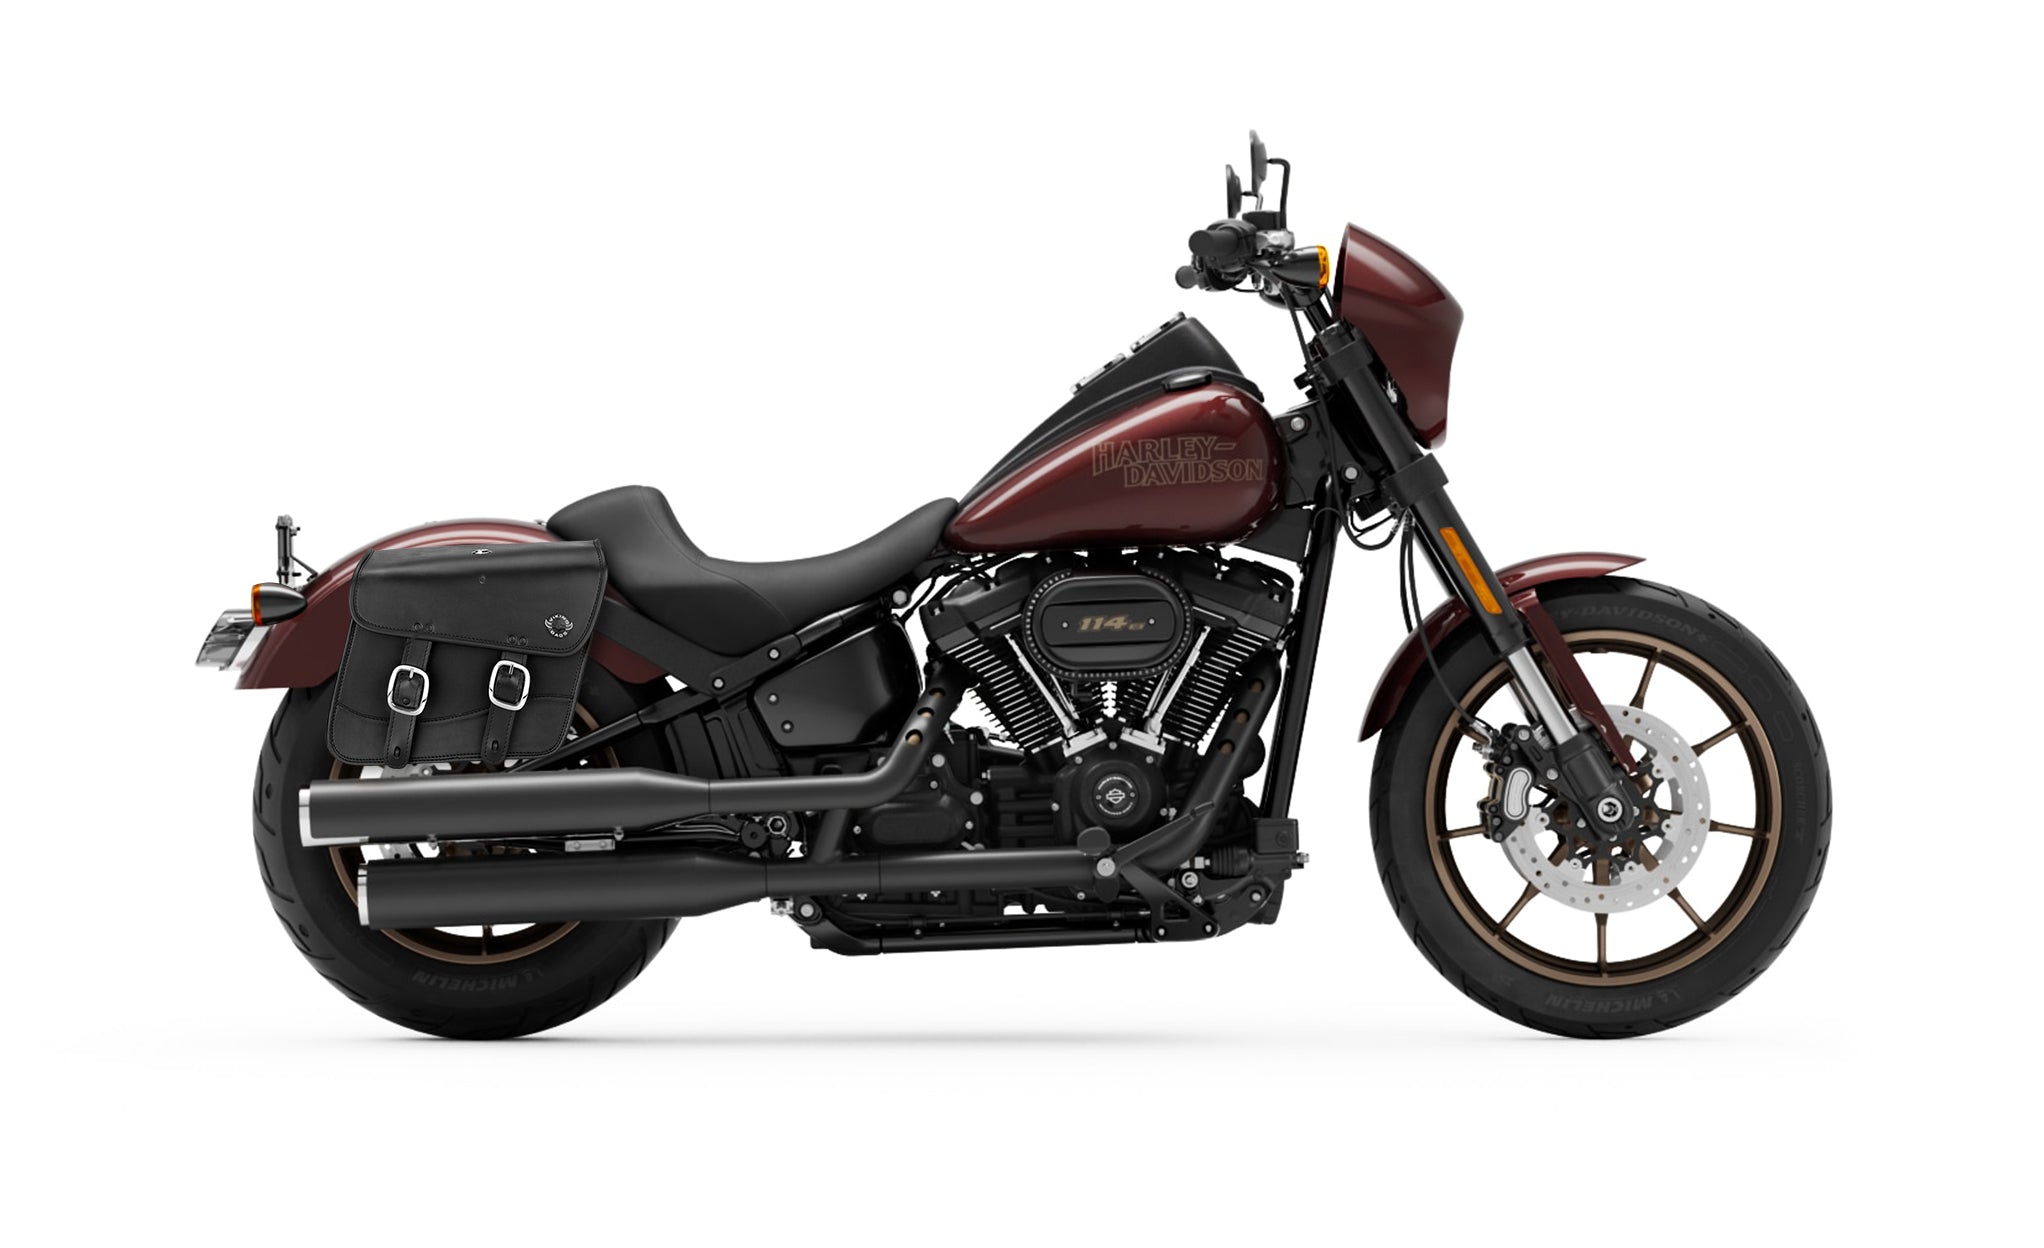 Viking Thor Medium Leather Motorcycle Saddlebags For Harley Davidson Softail Low Rider S Fxlrs on Bike Photo @expand